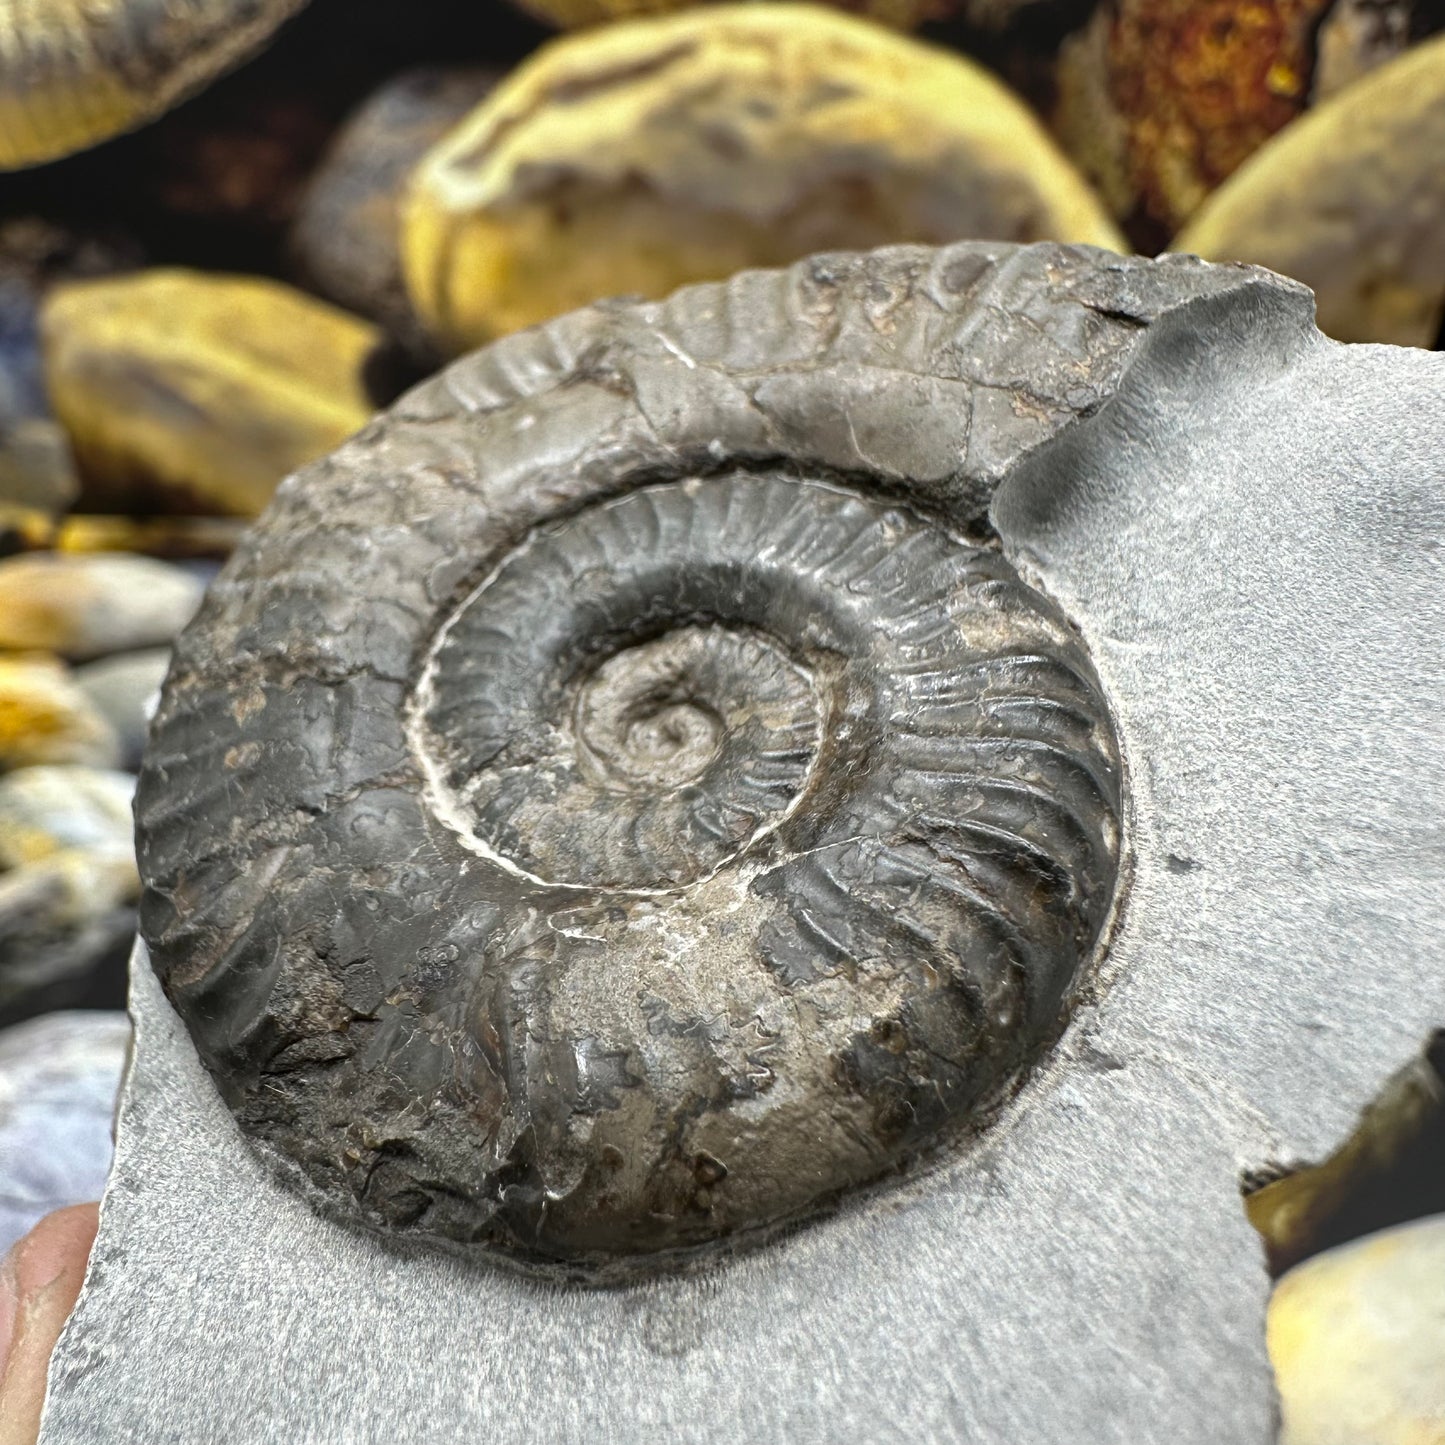 Grammoceras thoaurense ammonite shell fossil - Whitby, North Yorkshire